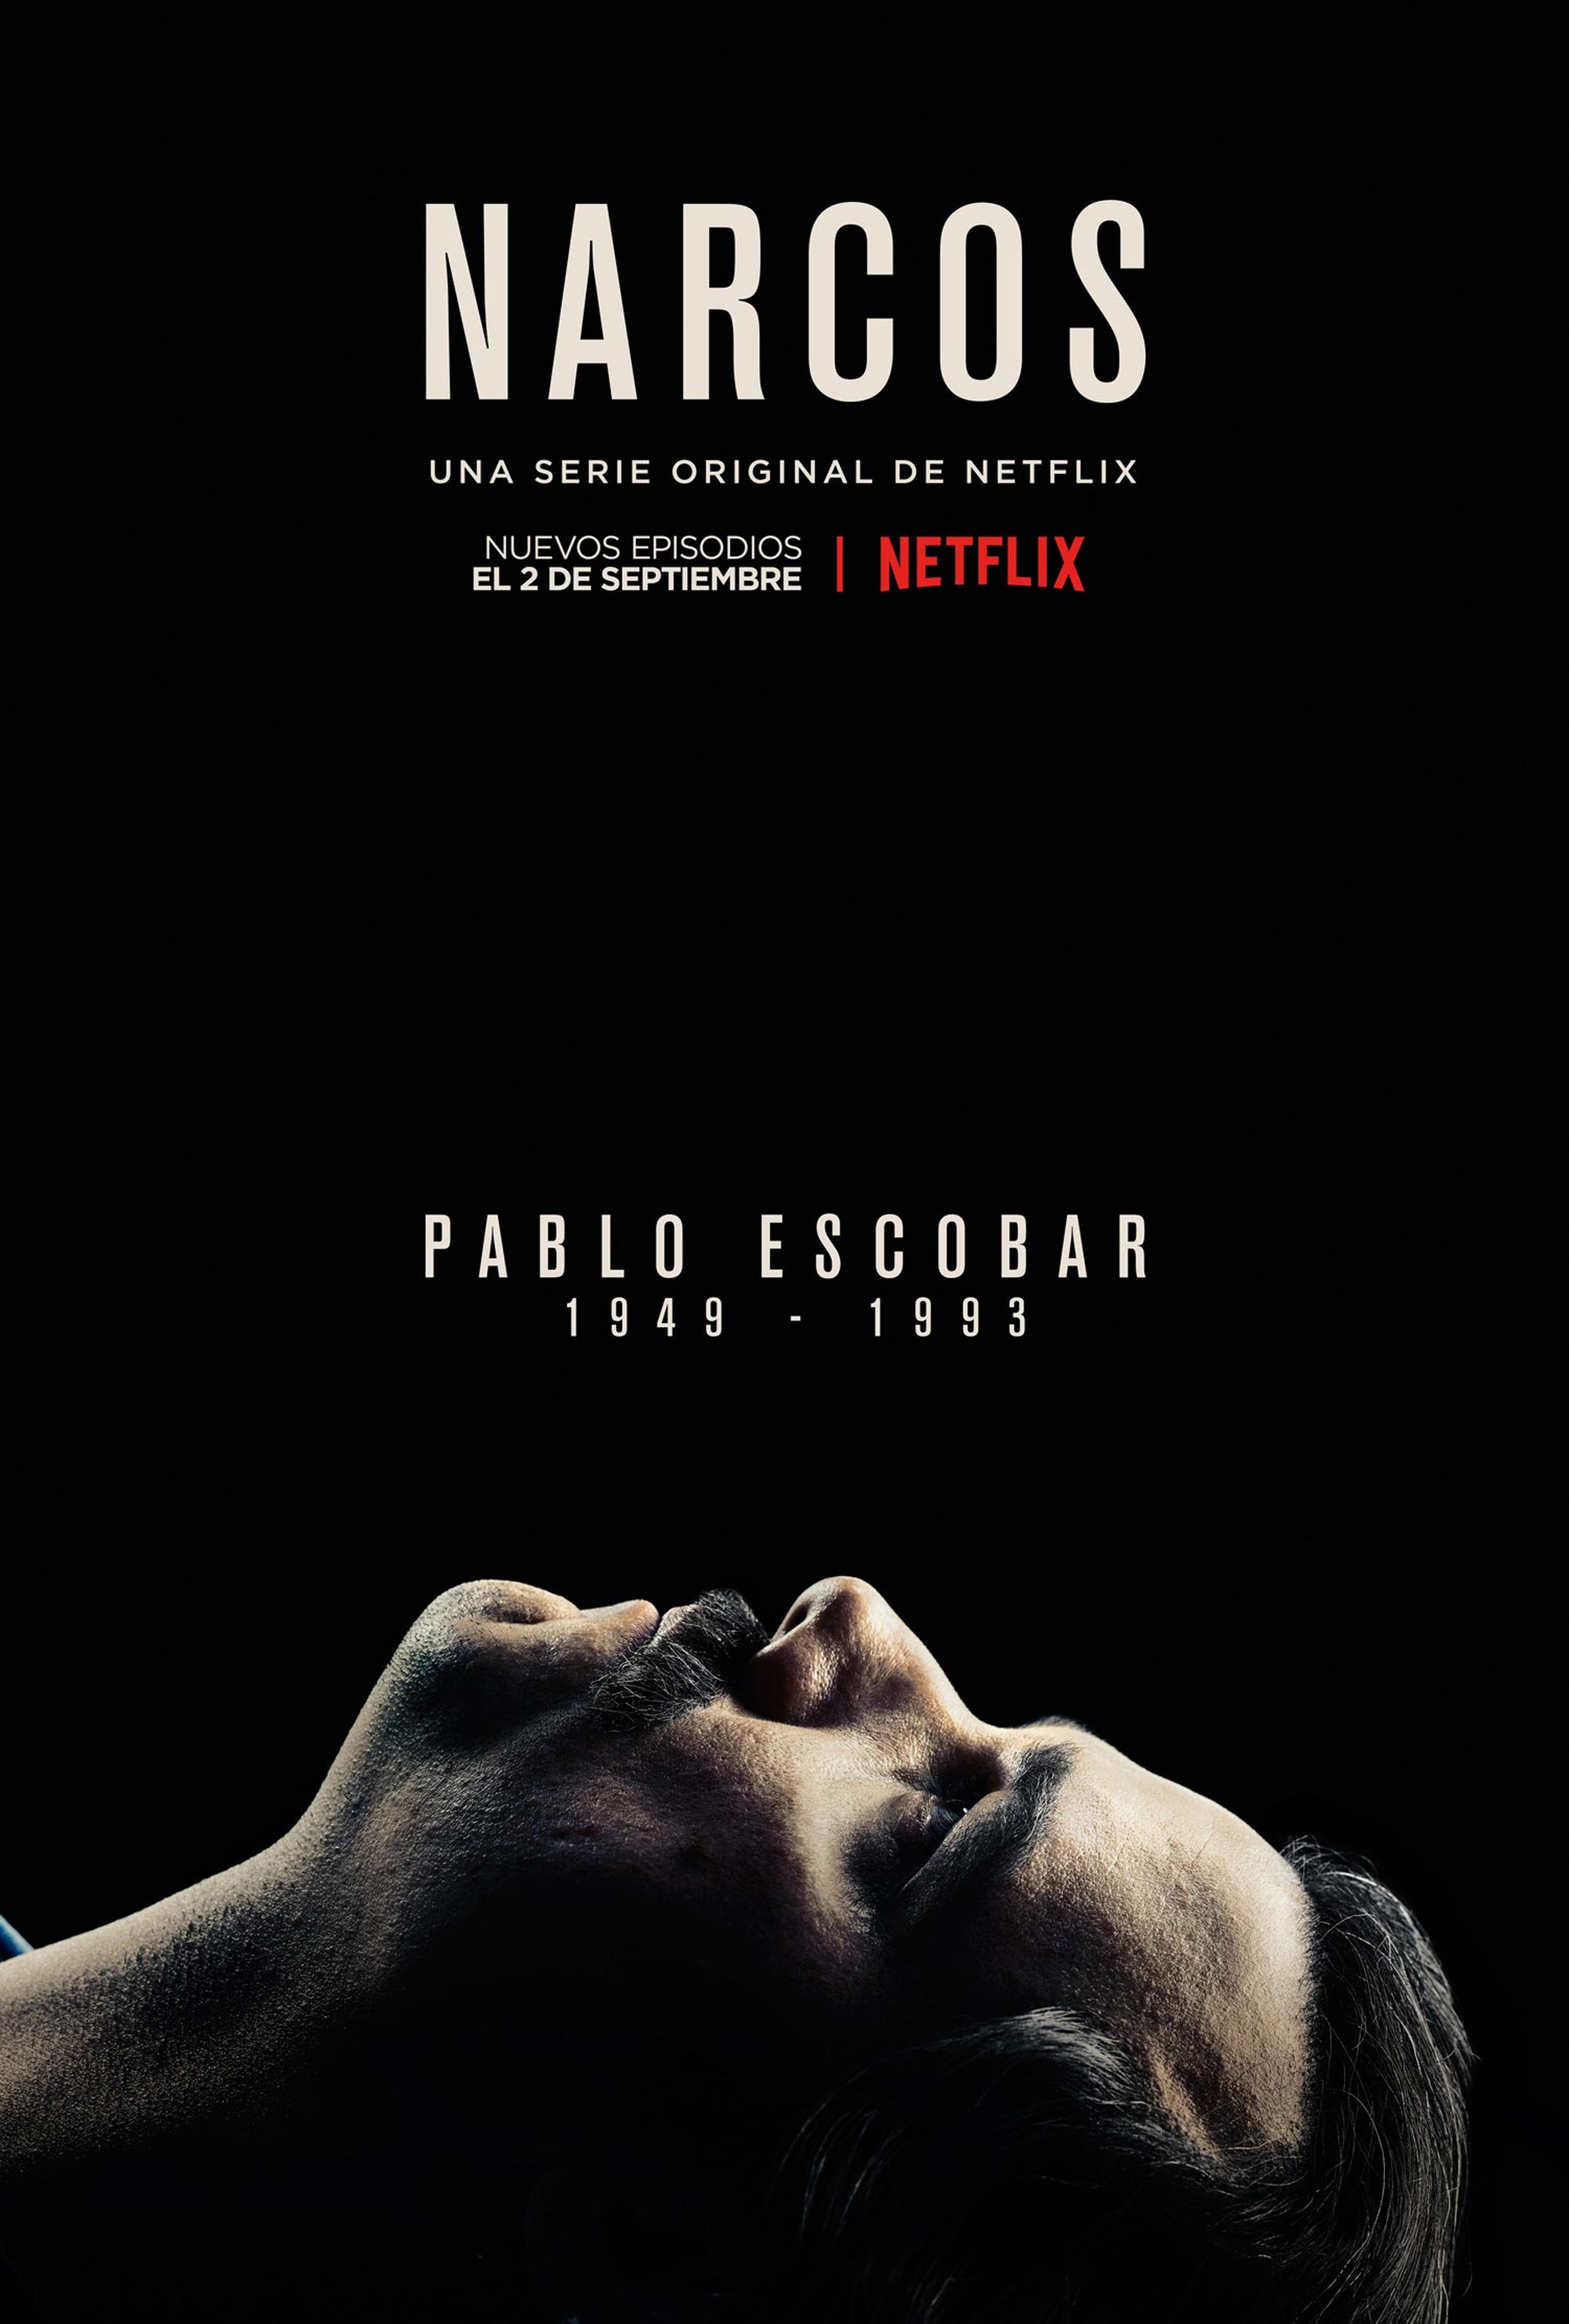 Narcos - Pablo Escobar